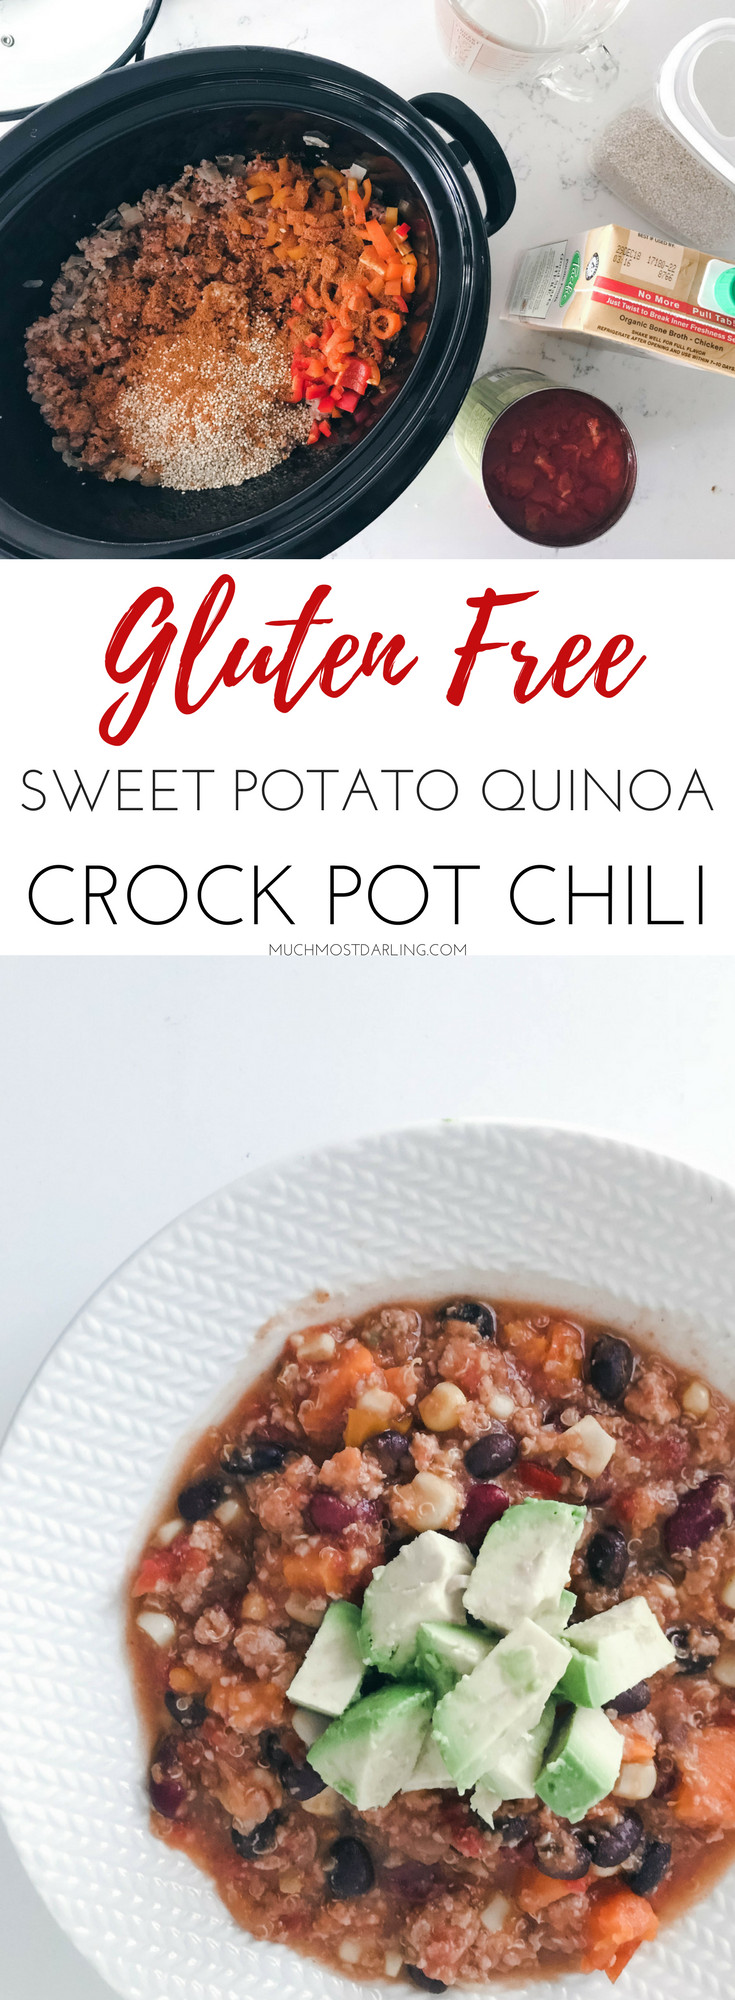 Dairy Free Crockpot Recipes
 Gluten Free Crockpot Recipe Sweet Potato & Ground Turkey